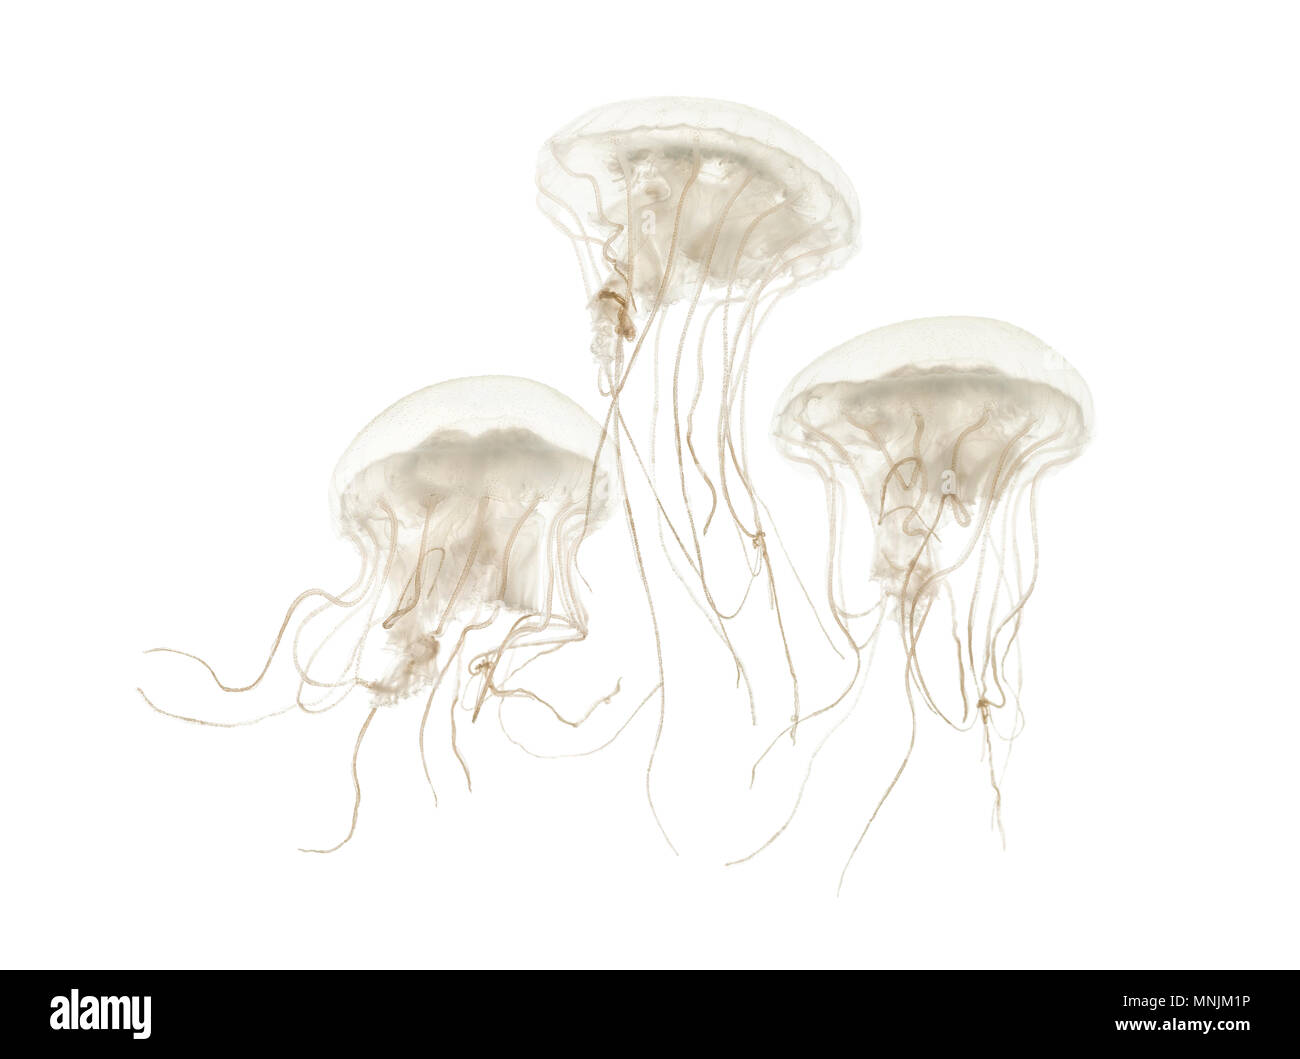 Disc jellyfish, Sanderia malayensis, swimming against white background Stock Photo